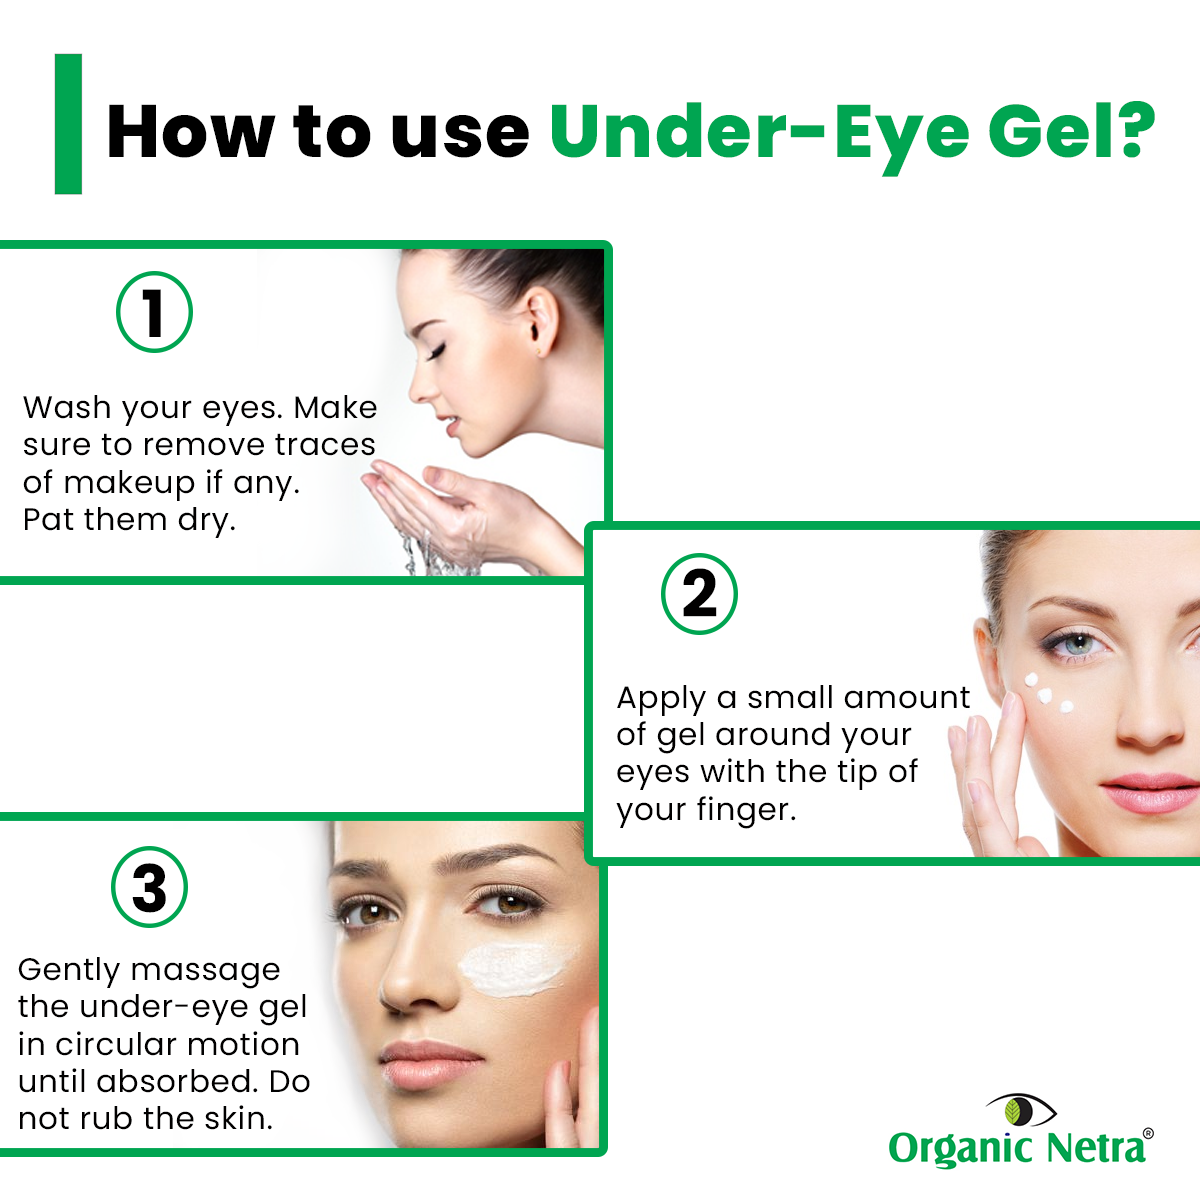 Ultra Ageless Under Eye Gel Cream - 25g